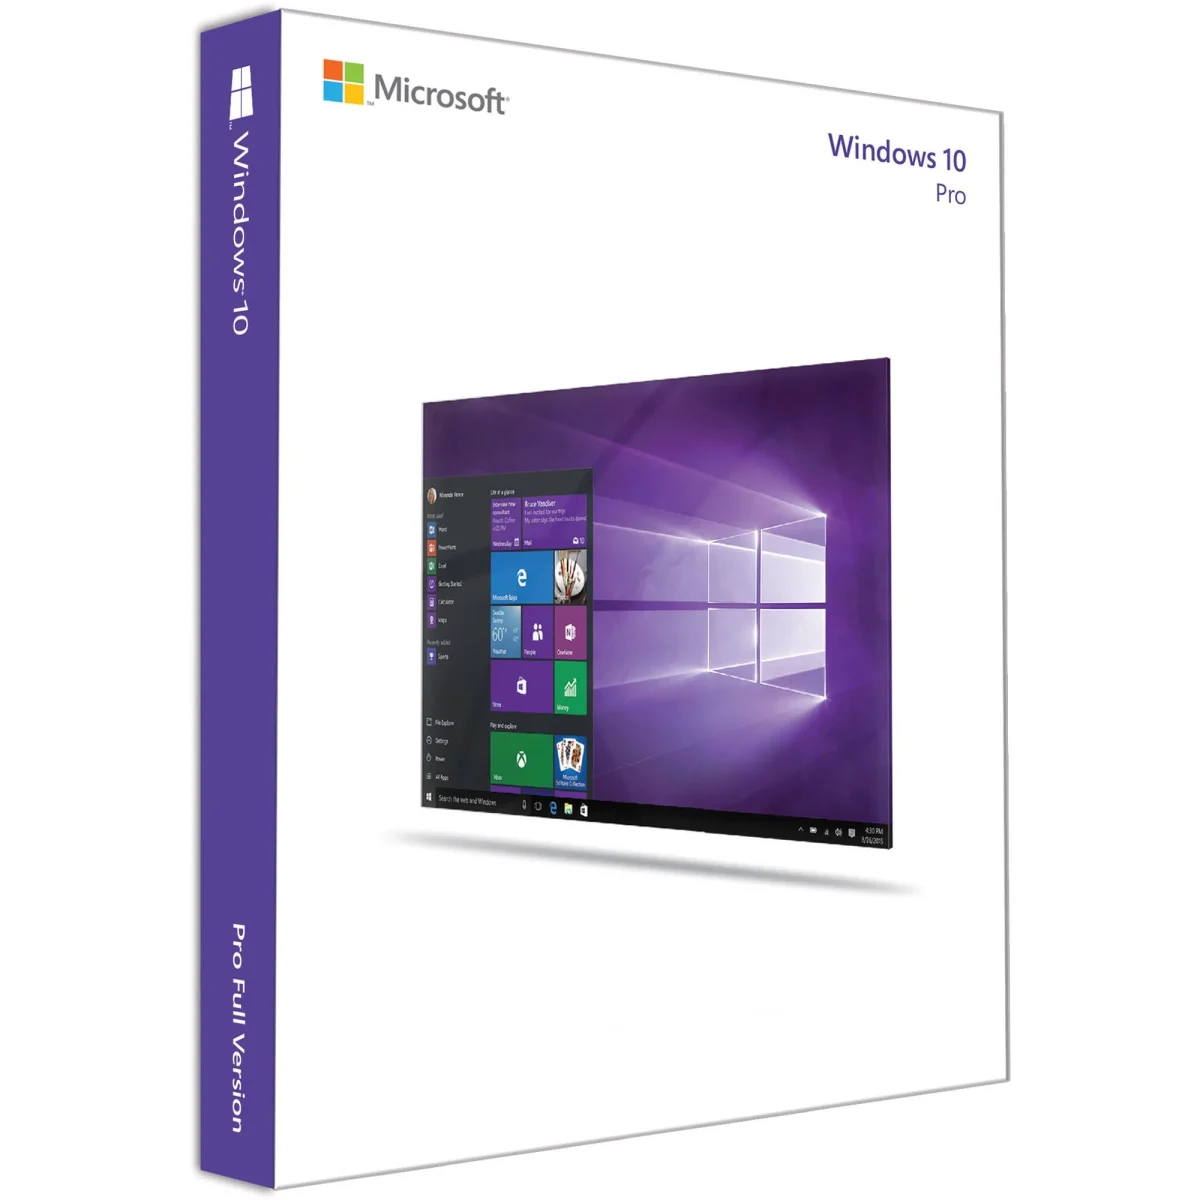 Windows 10 Pro Retail Box with Installation DVD